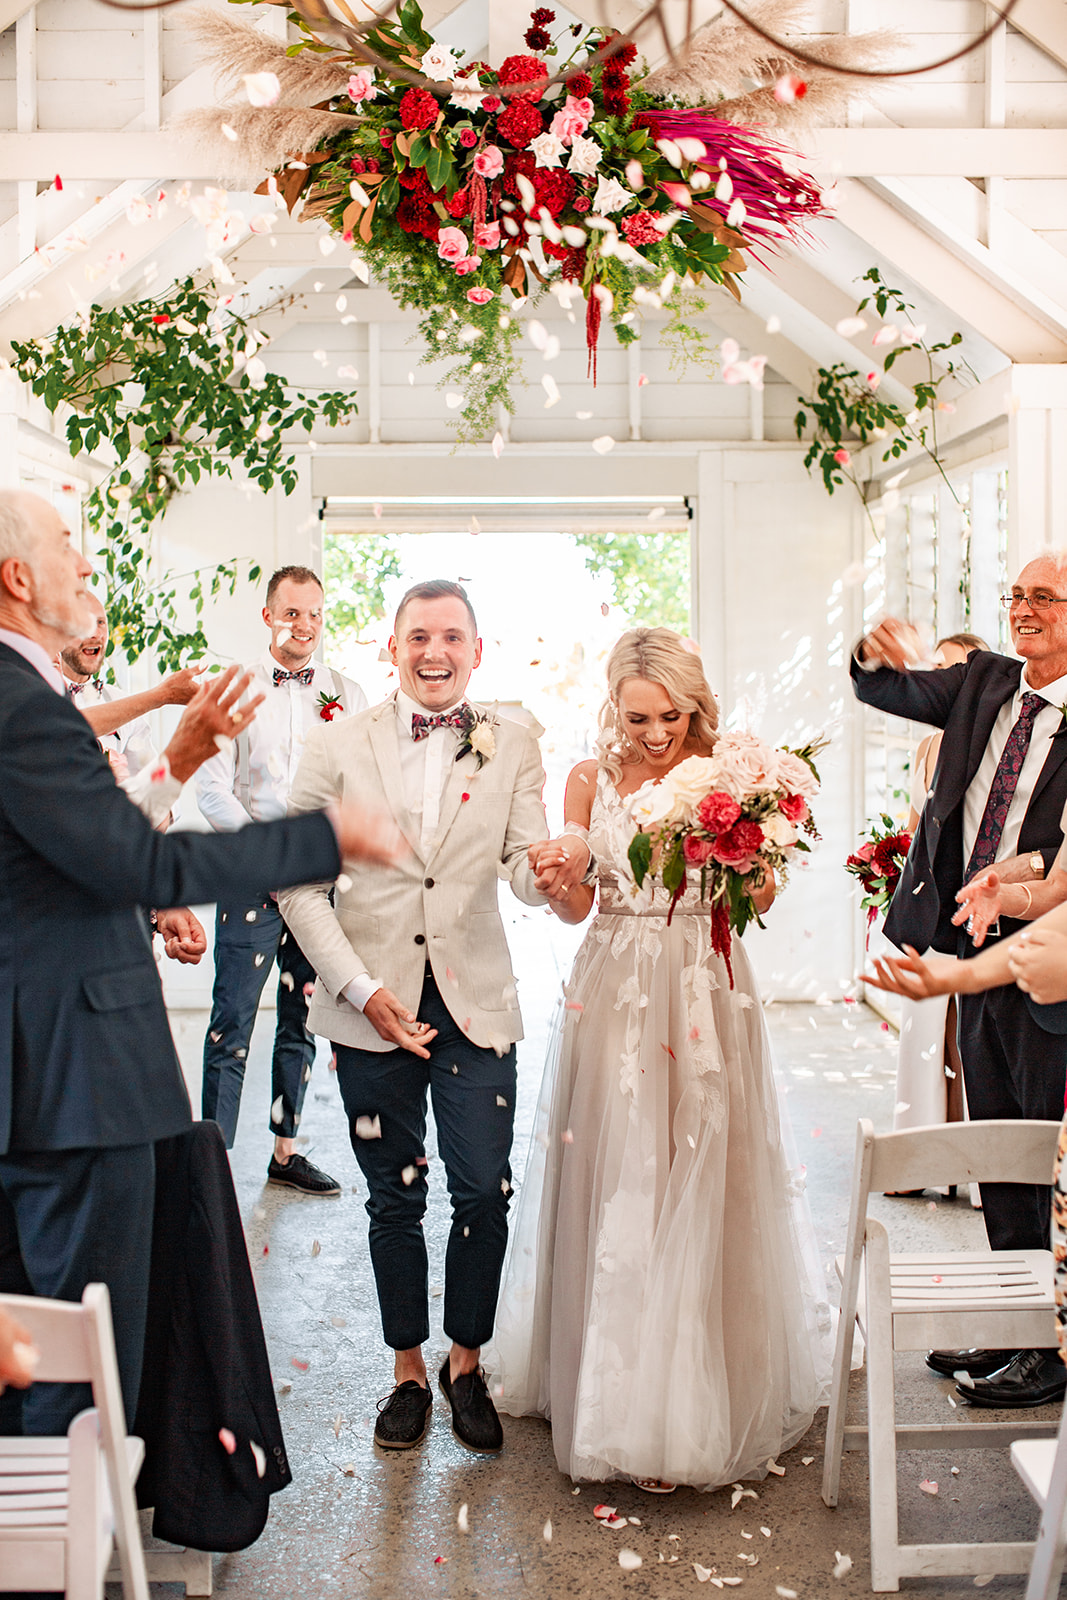 Modern boho wedding on the Mornington Peninsula. Dalywaters Garden Chapel ceremony, reception at Alatonera Restaurant. Photographed by Runaway Hearts. Macy & Sean.